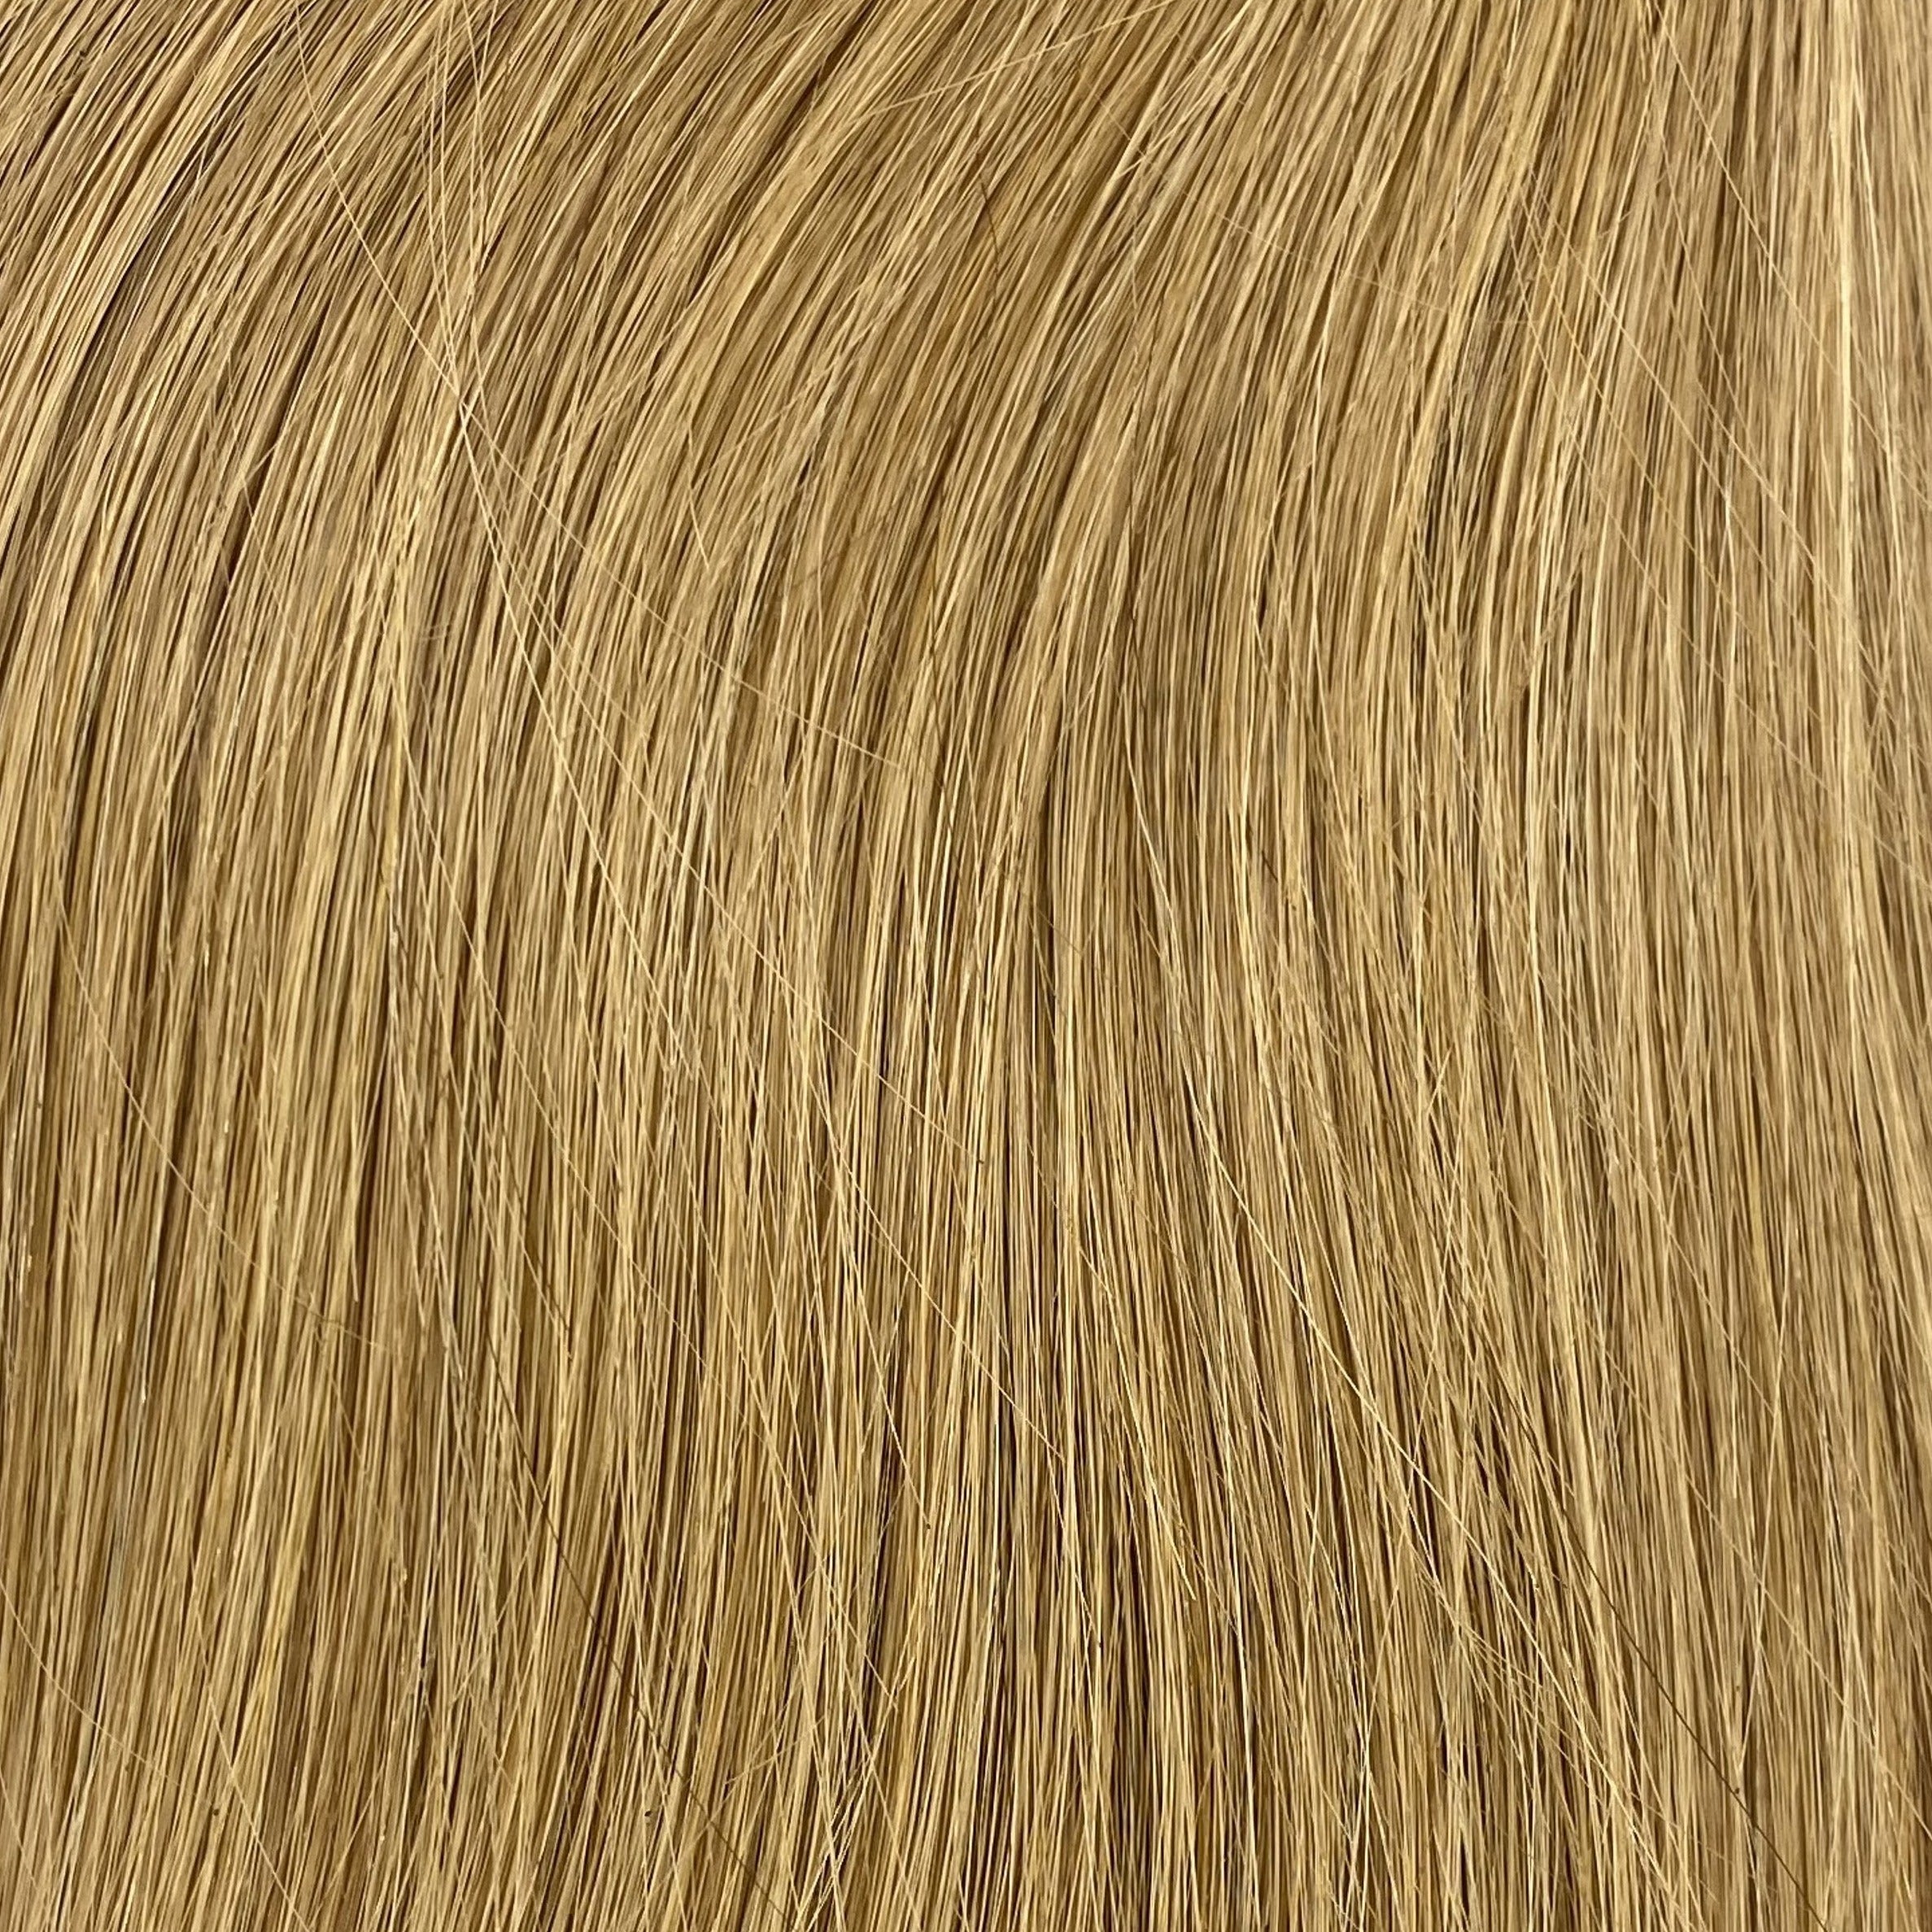 Velo Sale #12 - 20 inches - Dark Golden Blonde - Image 1